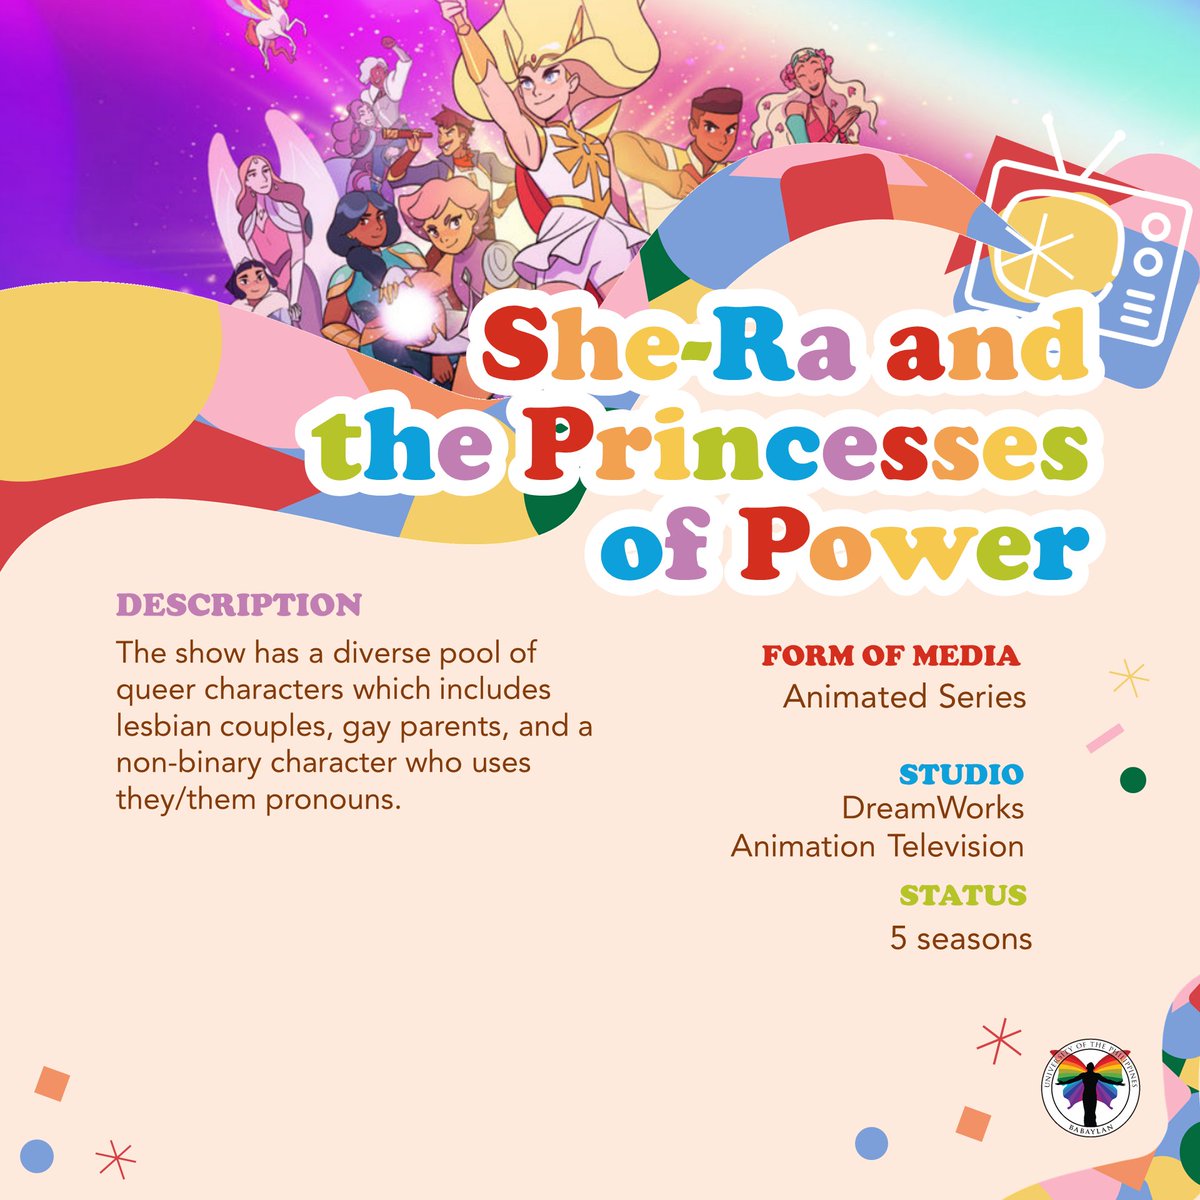 2. She-Ra and the Princesses of Power